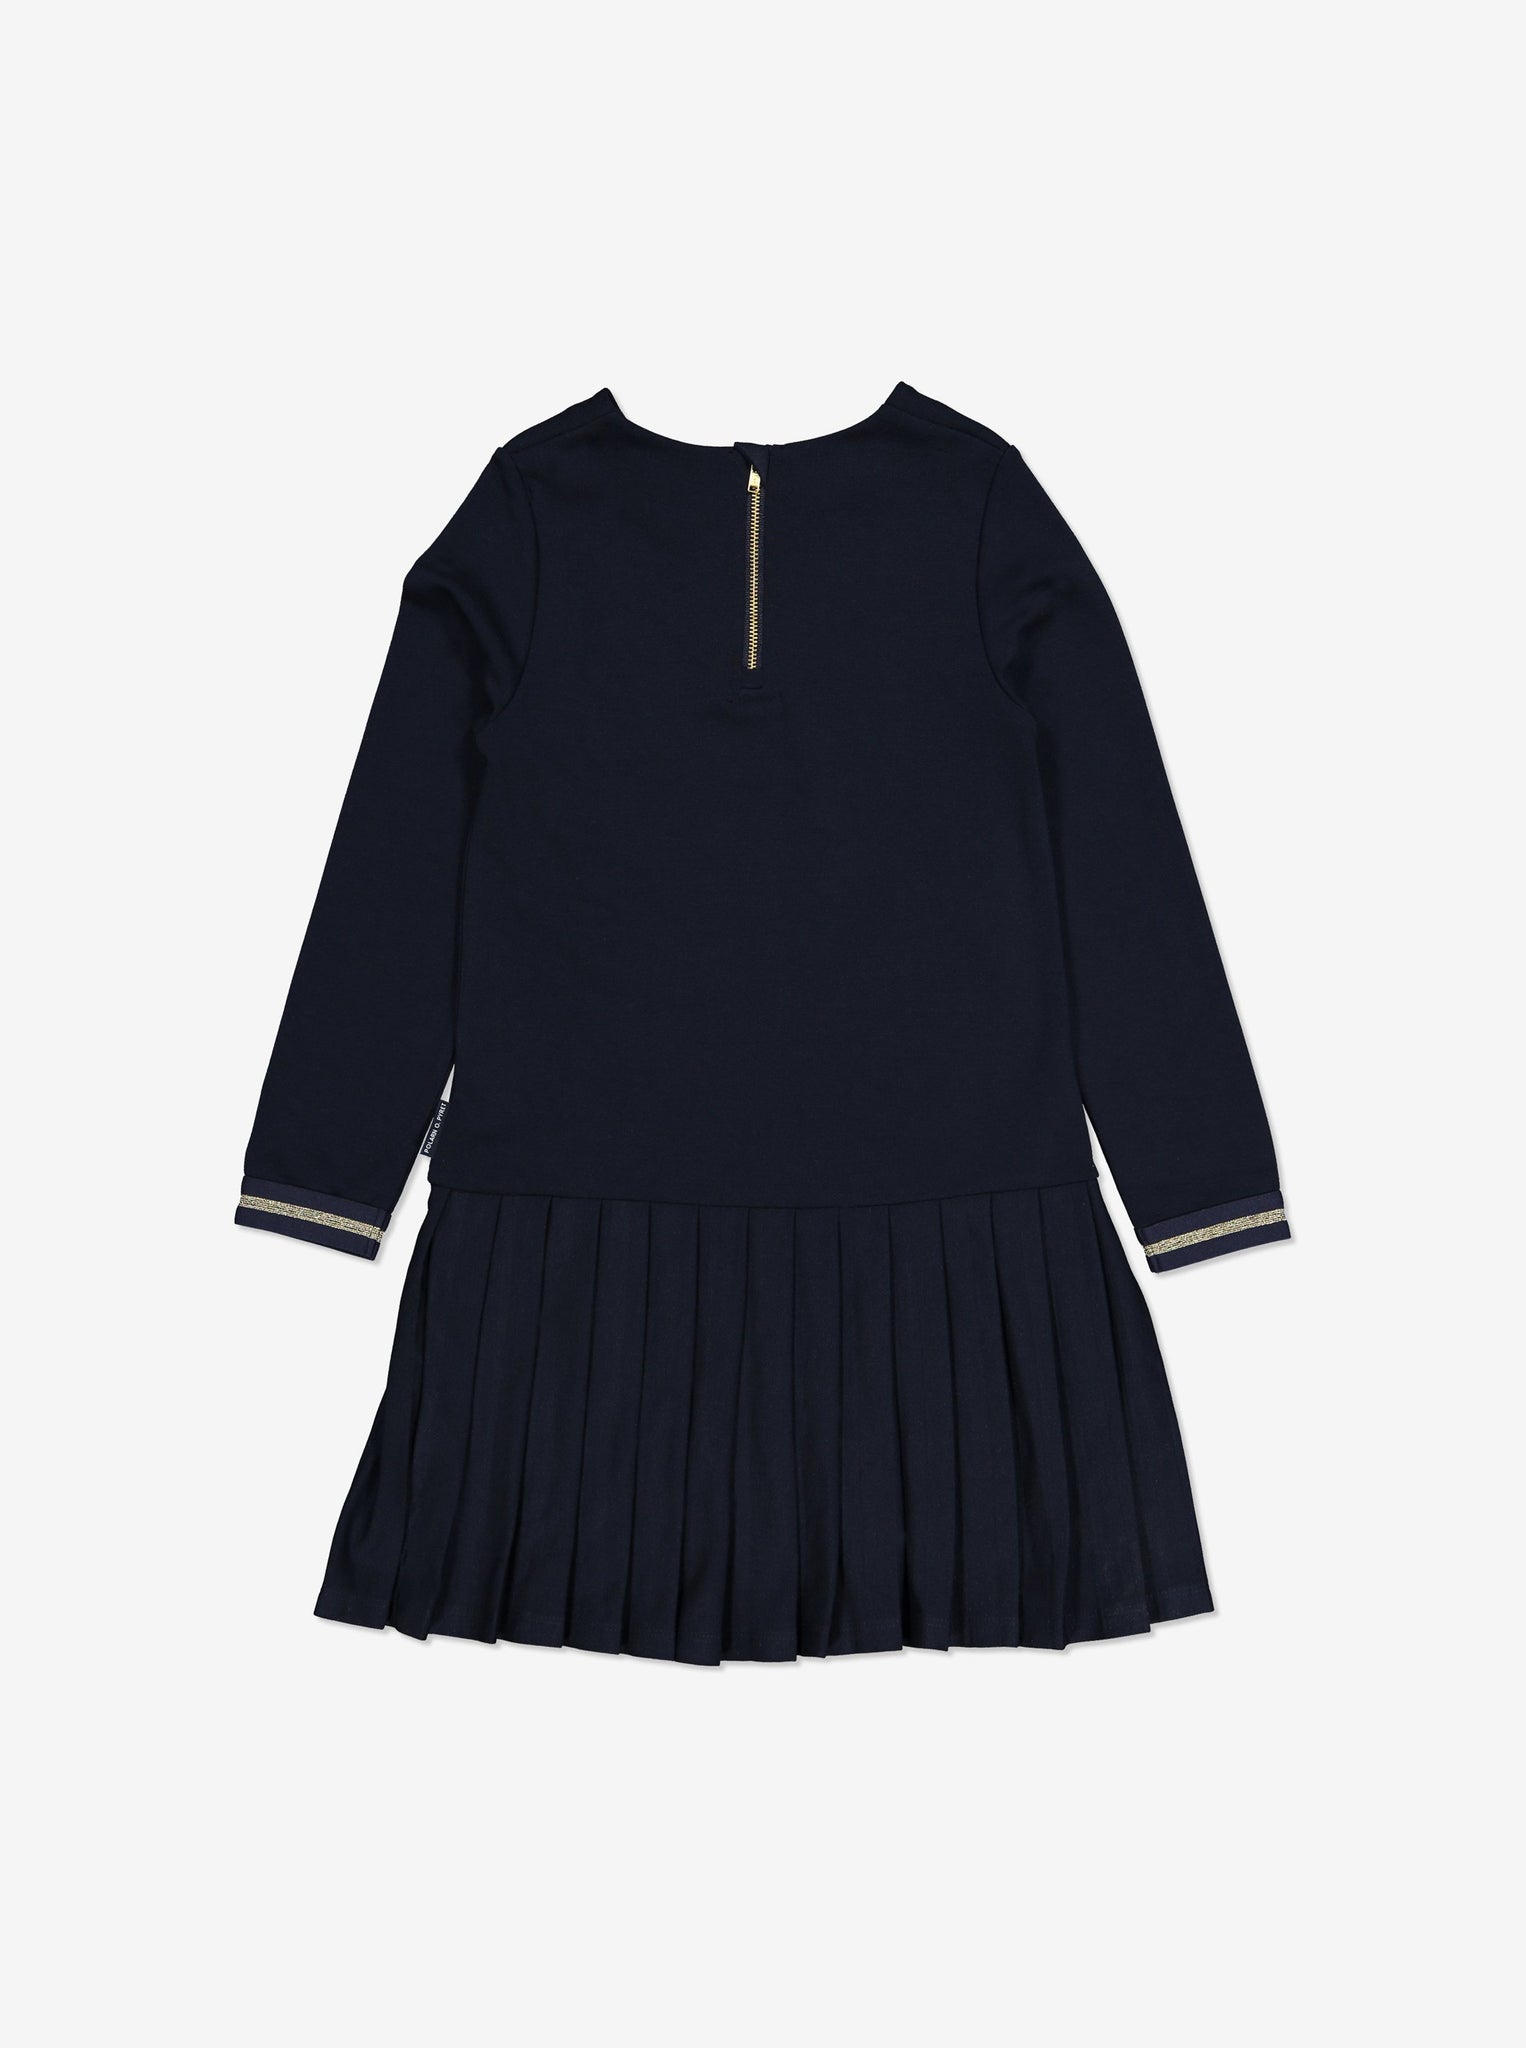 Pleated Skirt Kids Dress-Girl-1-6y-Navy